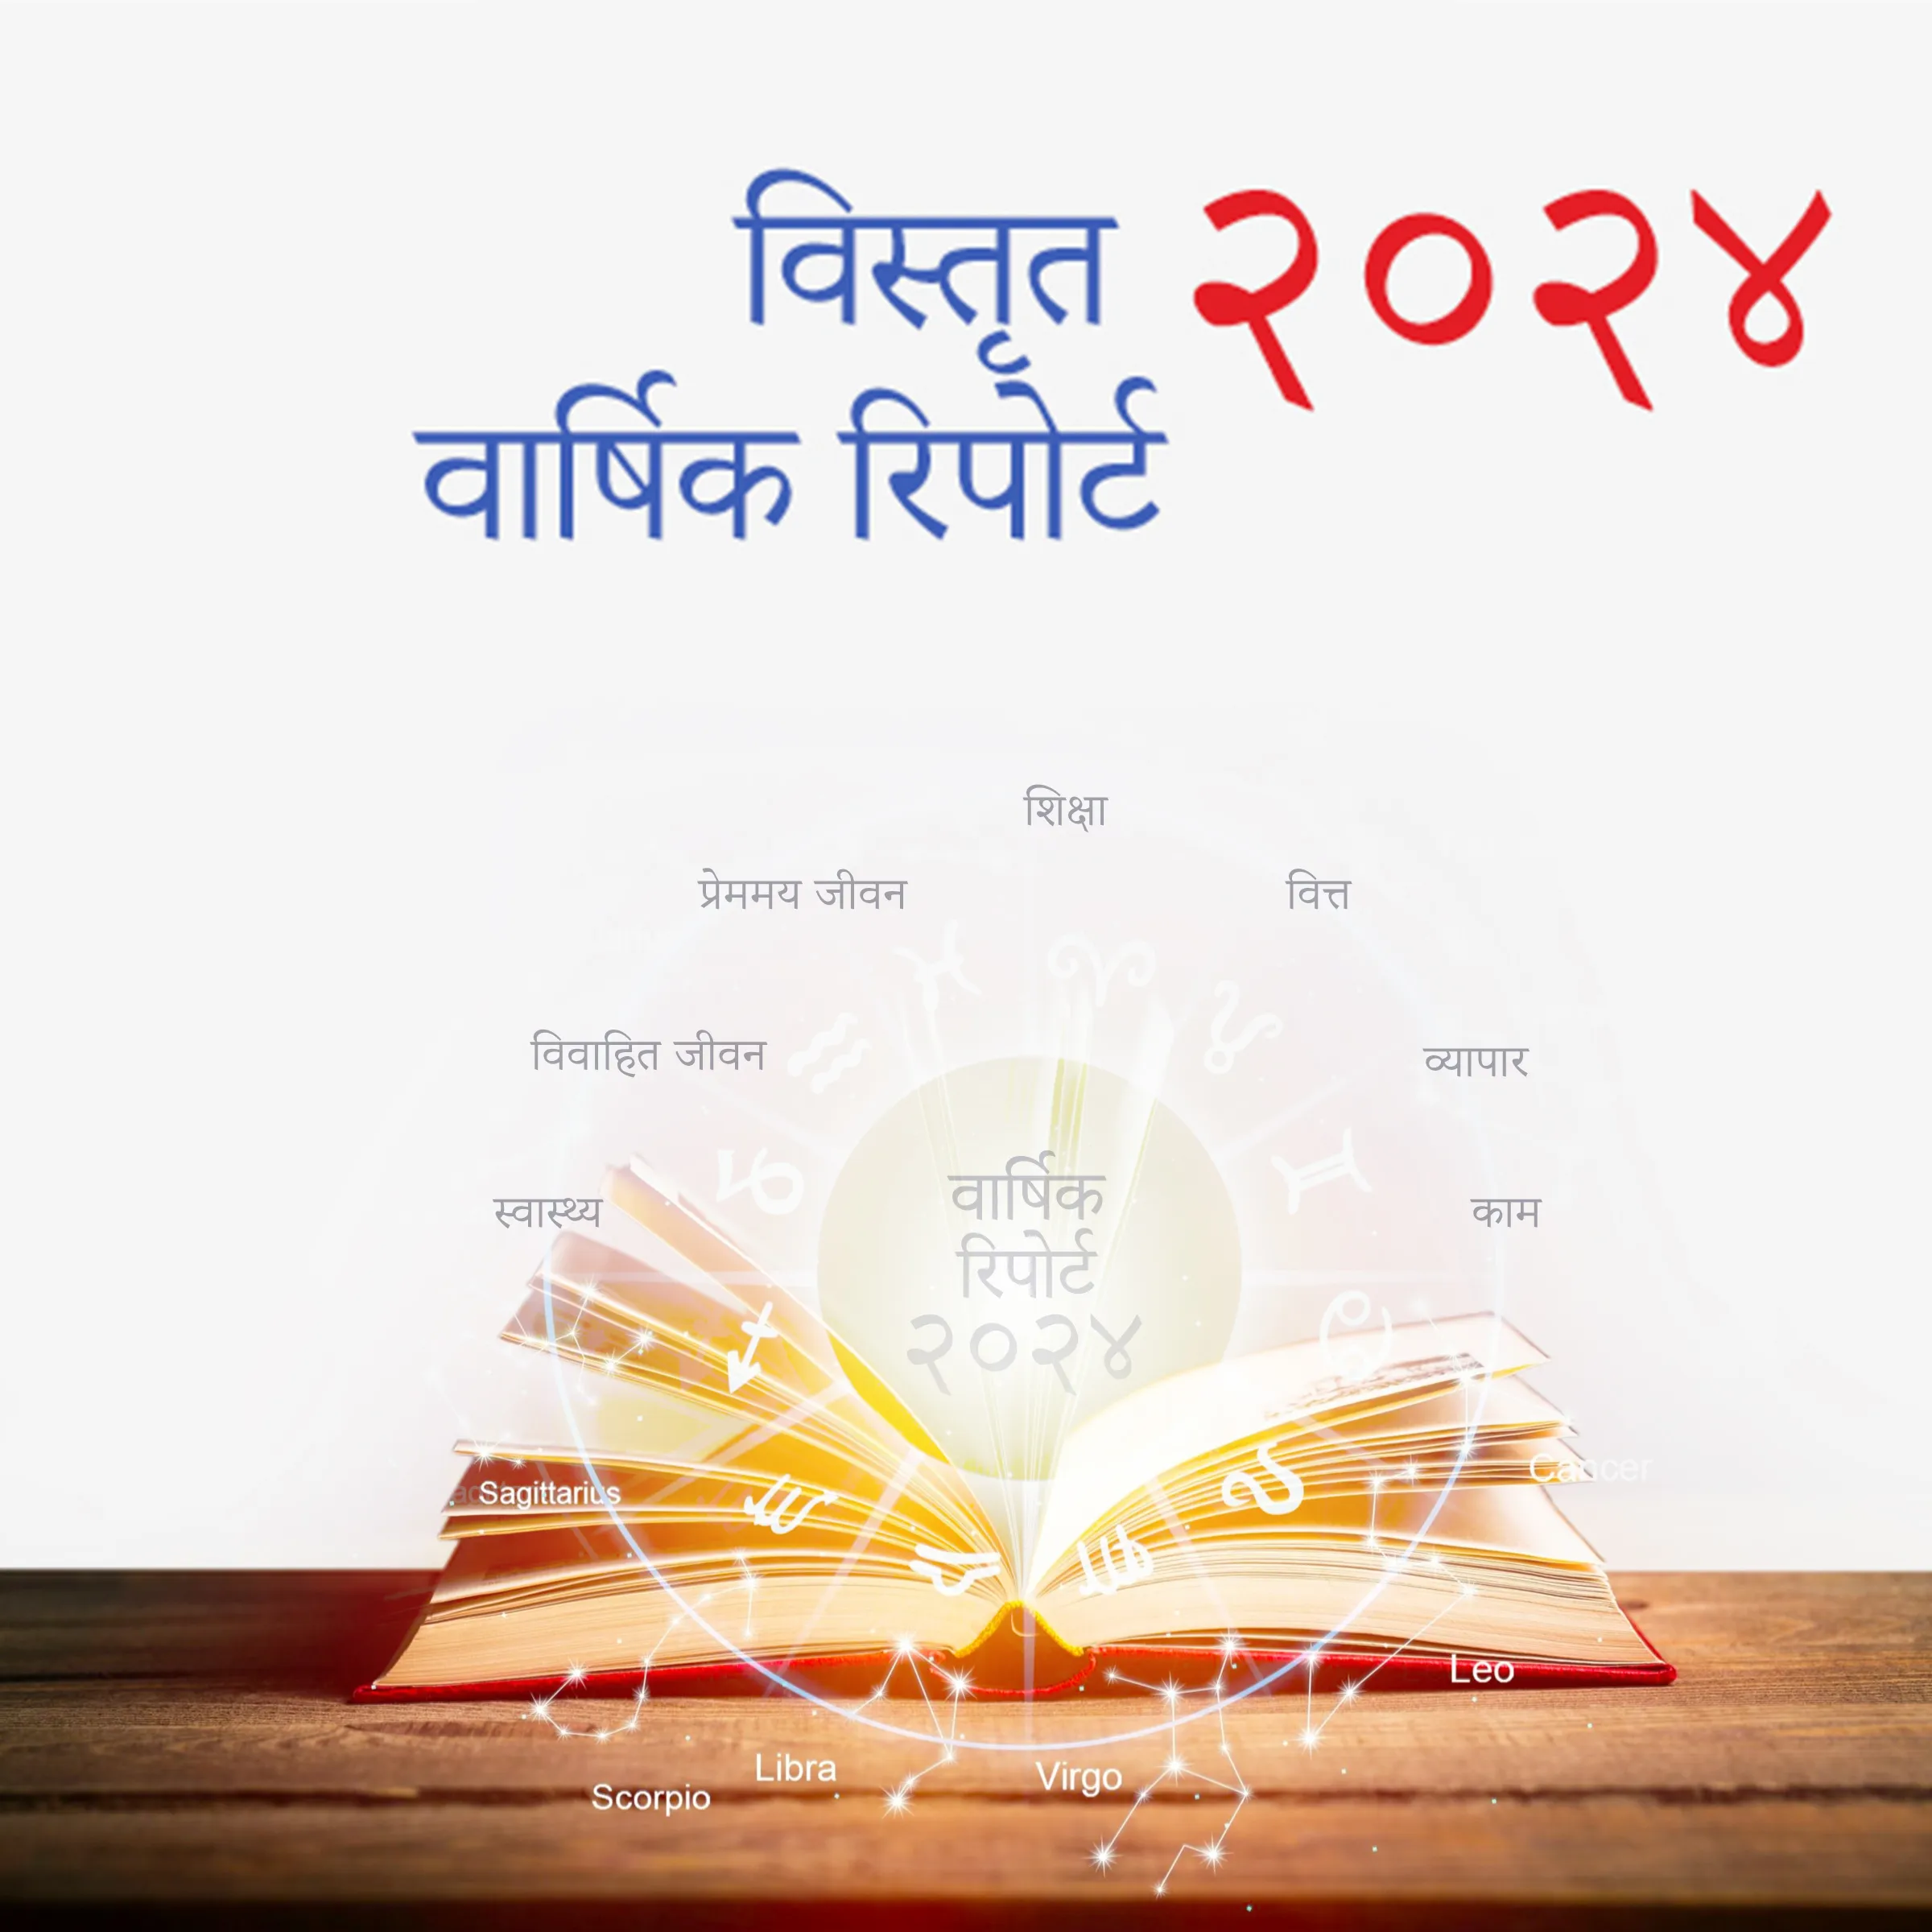 २०२४ विस्तृत वार्षिक रिपोर्ट – Acharya Vyom